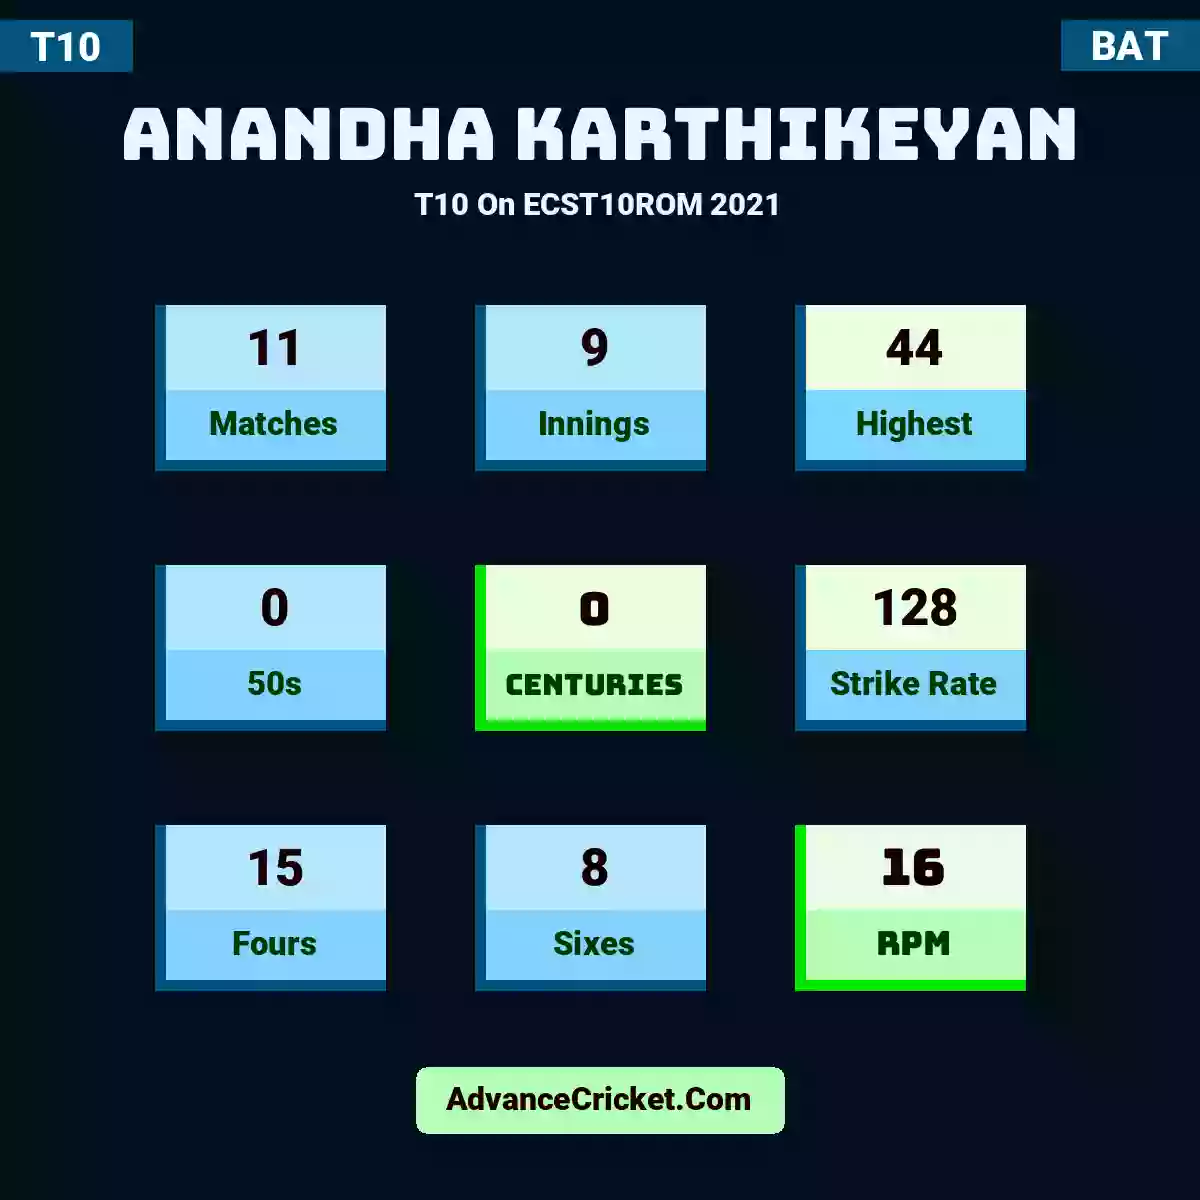 Anandha Karthikeyan T10  On ECST10ROM 2021, Anandha Karthikeyan played 11 matches, scored 44 runs as highest, 0 half-centuries, and 0 centuries, with a strike rate of 128. A.Karthikeyan hit 15 fours and 8 sixes, with an RPM of 16.